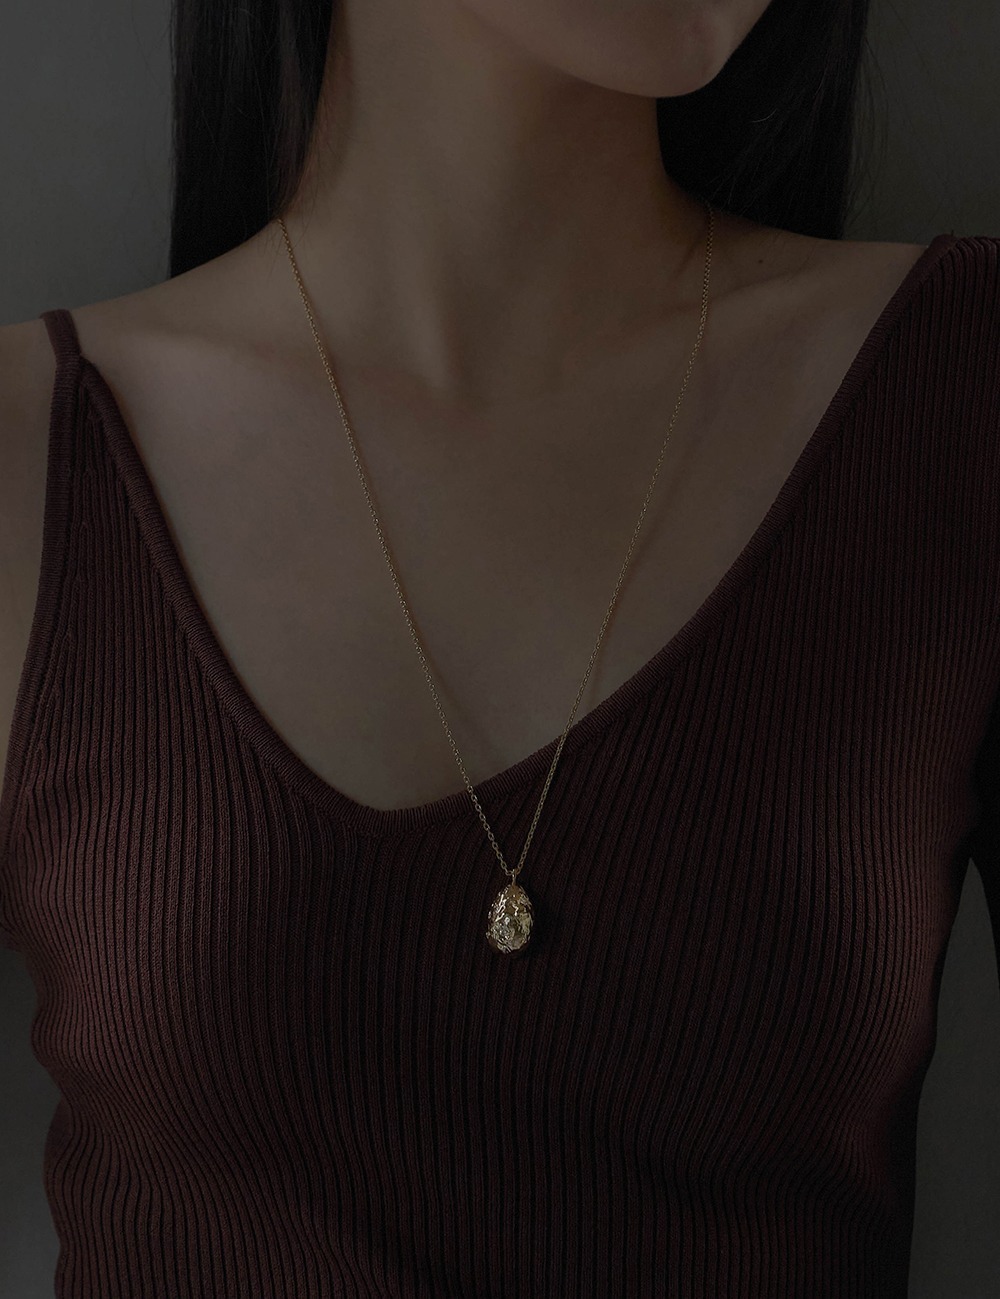 Molten lava necklace